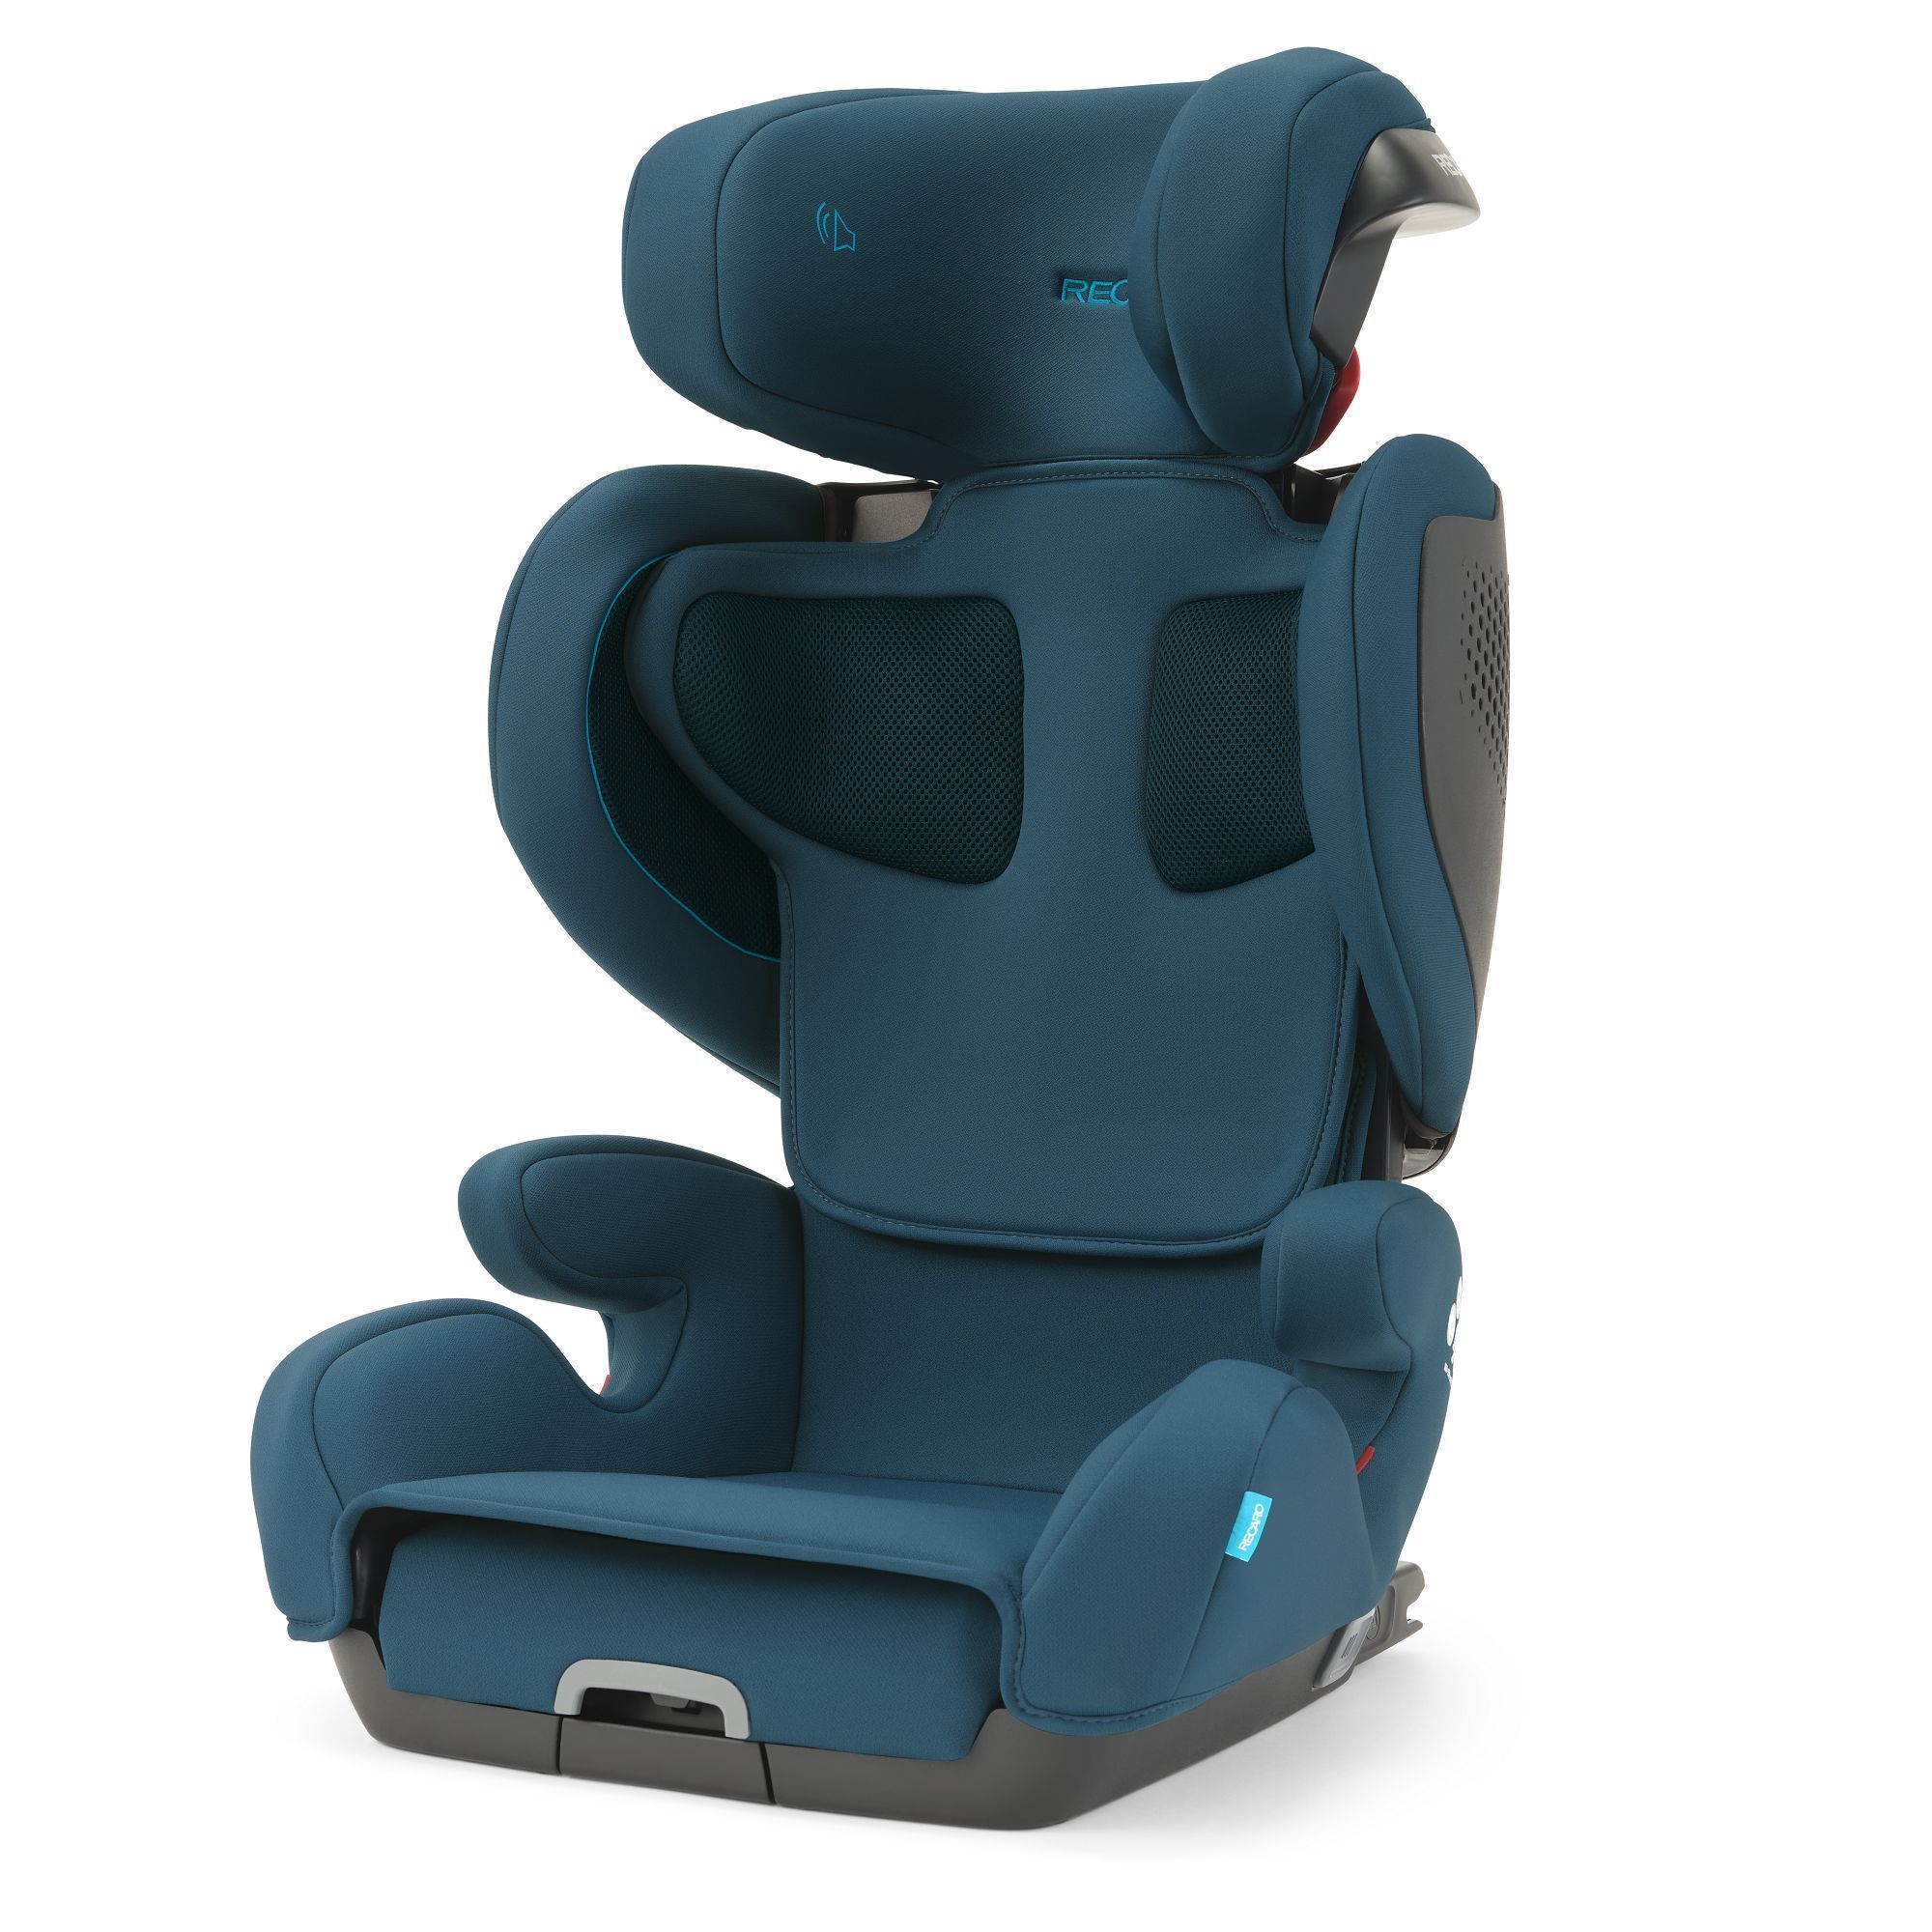 heelal opening Verwaand Recaro Mako Elite 2 Select i-Size Isofix Kids Child Car Seat | eBay